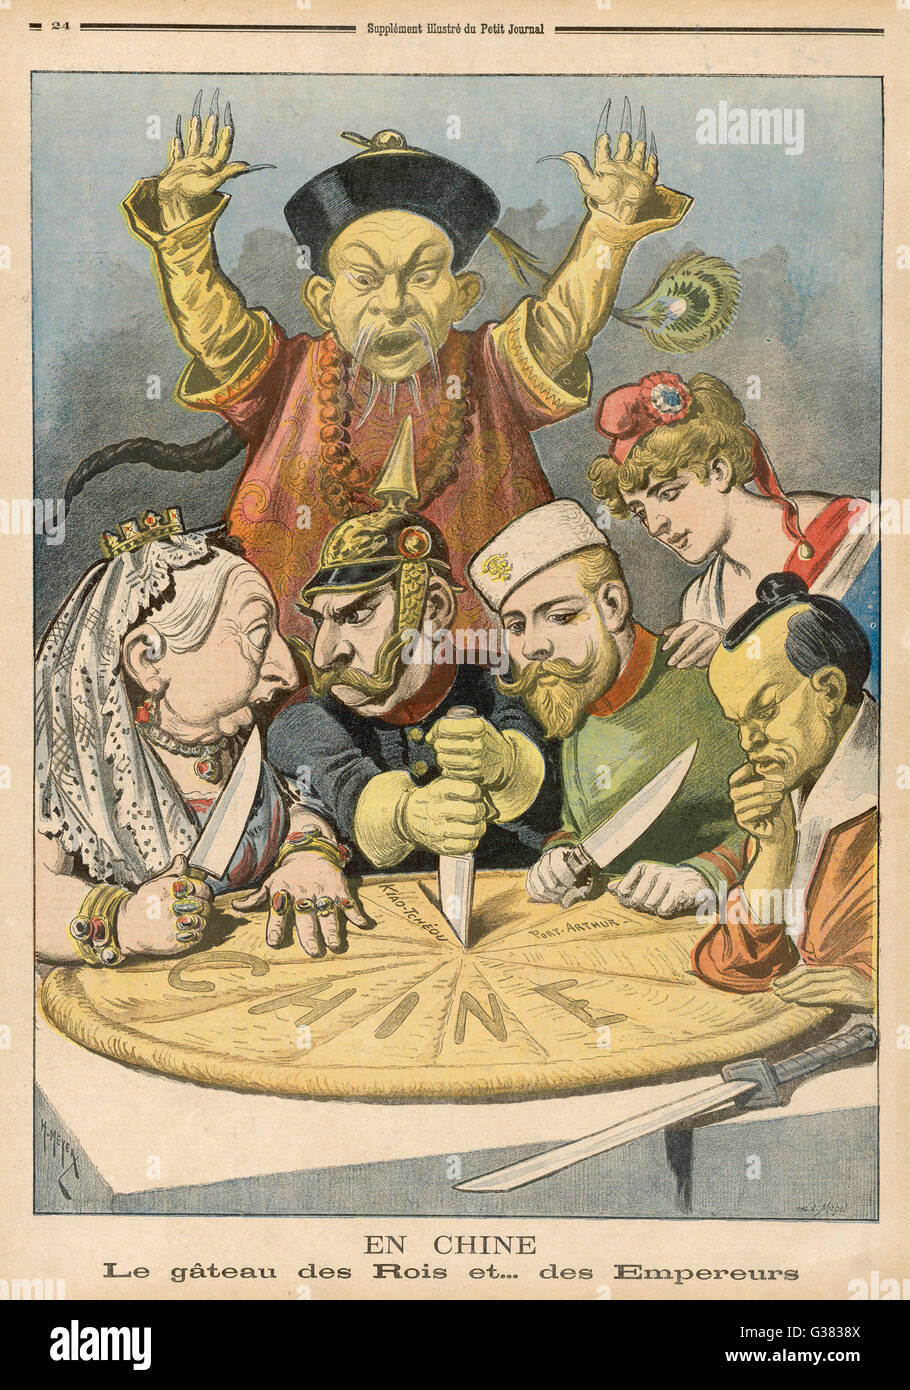 European powers slice the  Chinese cake        Date: 1898 Stock Photo